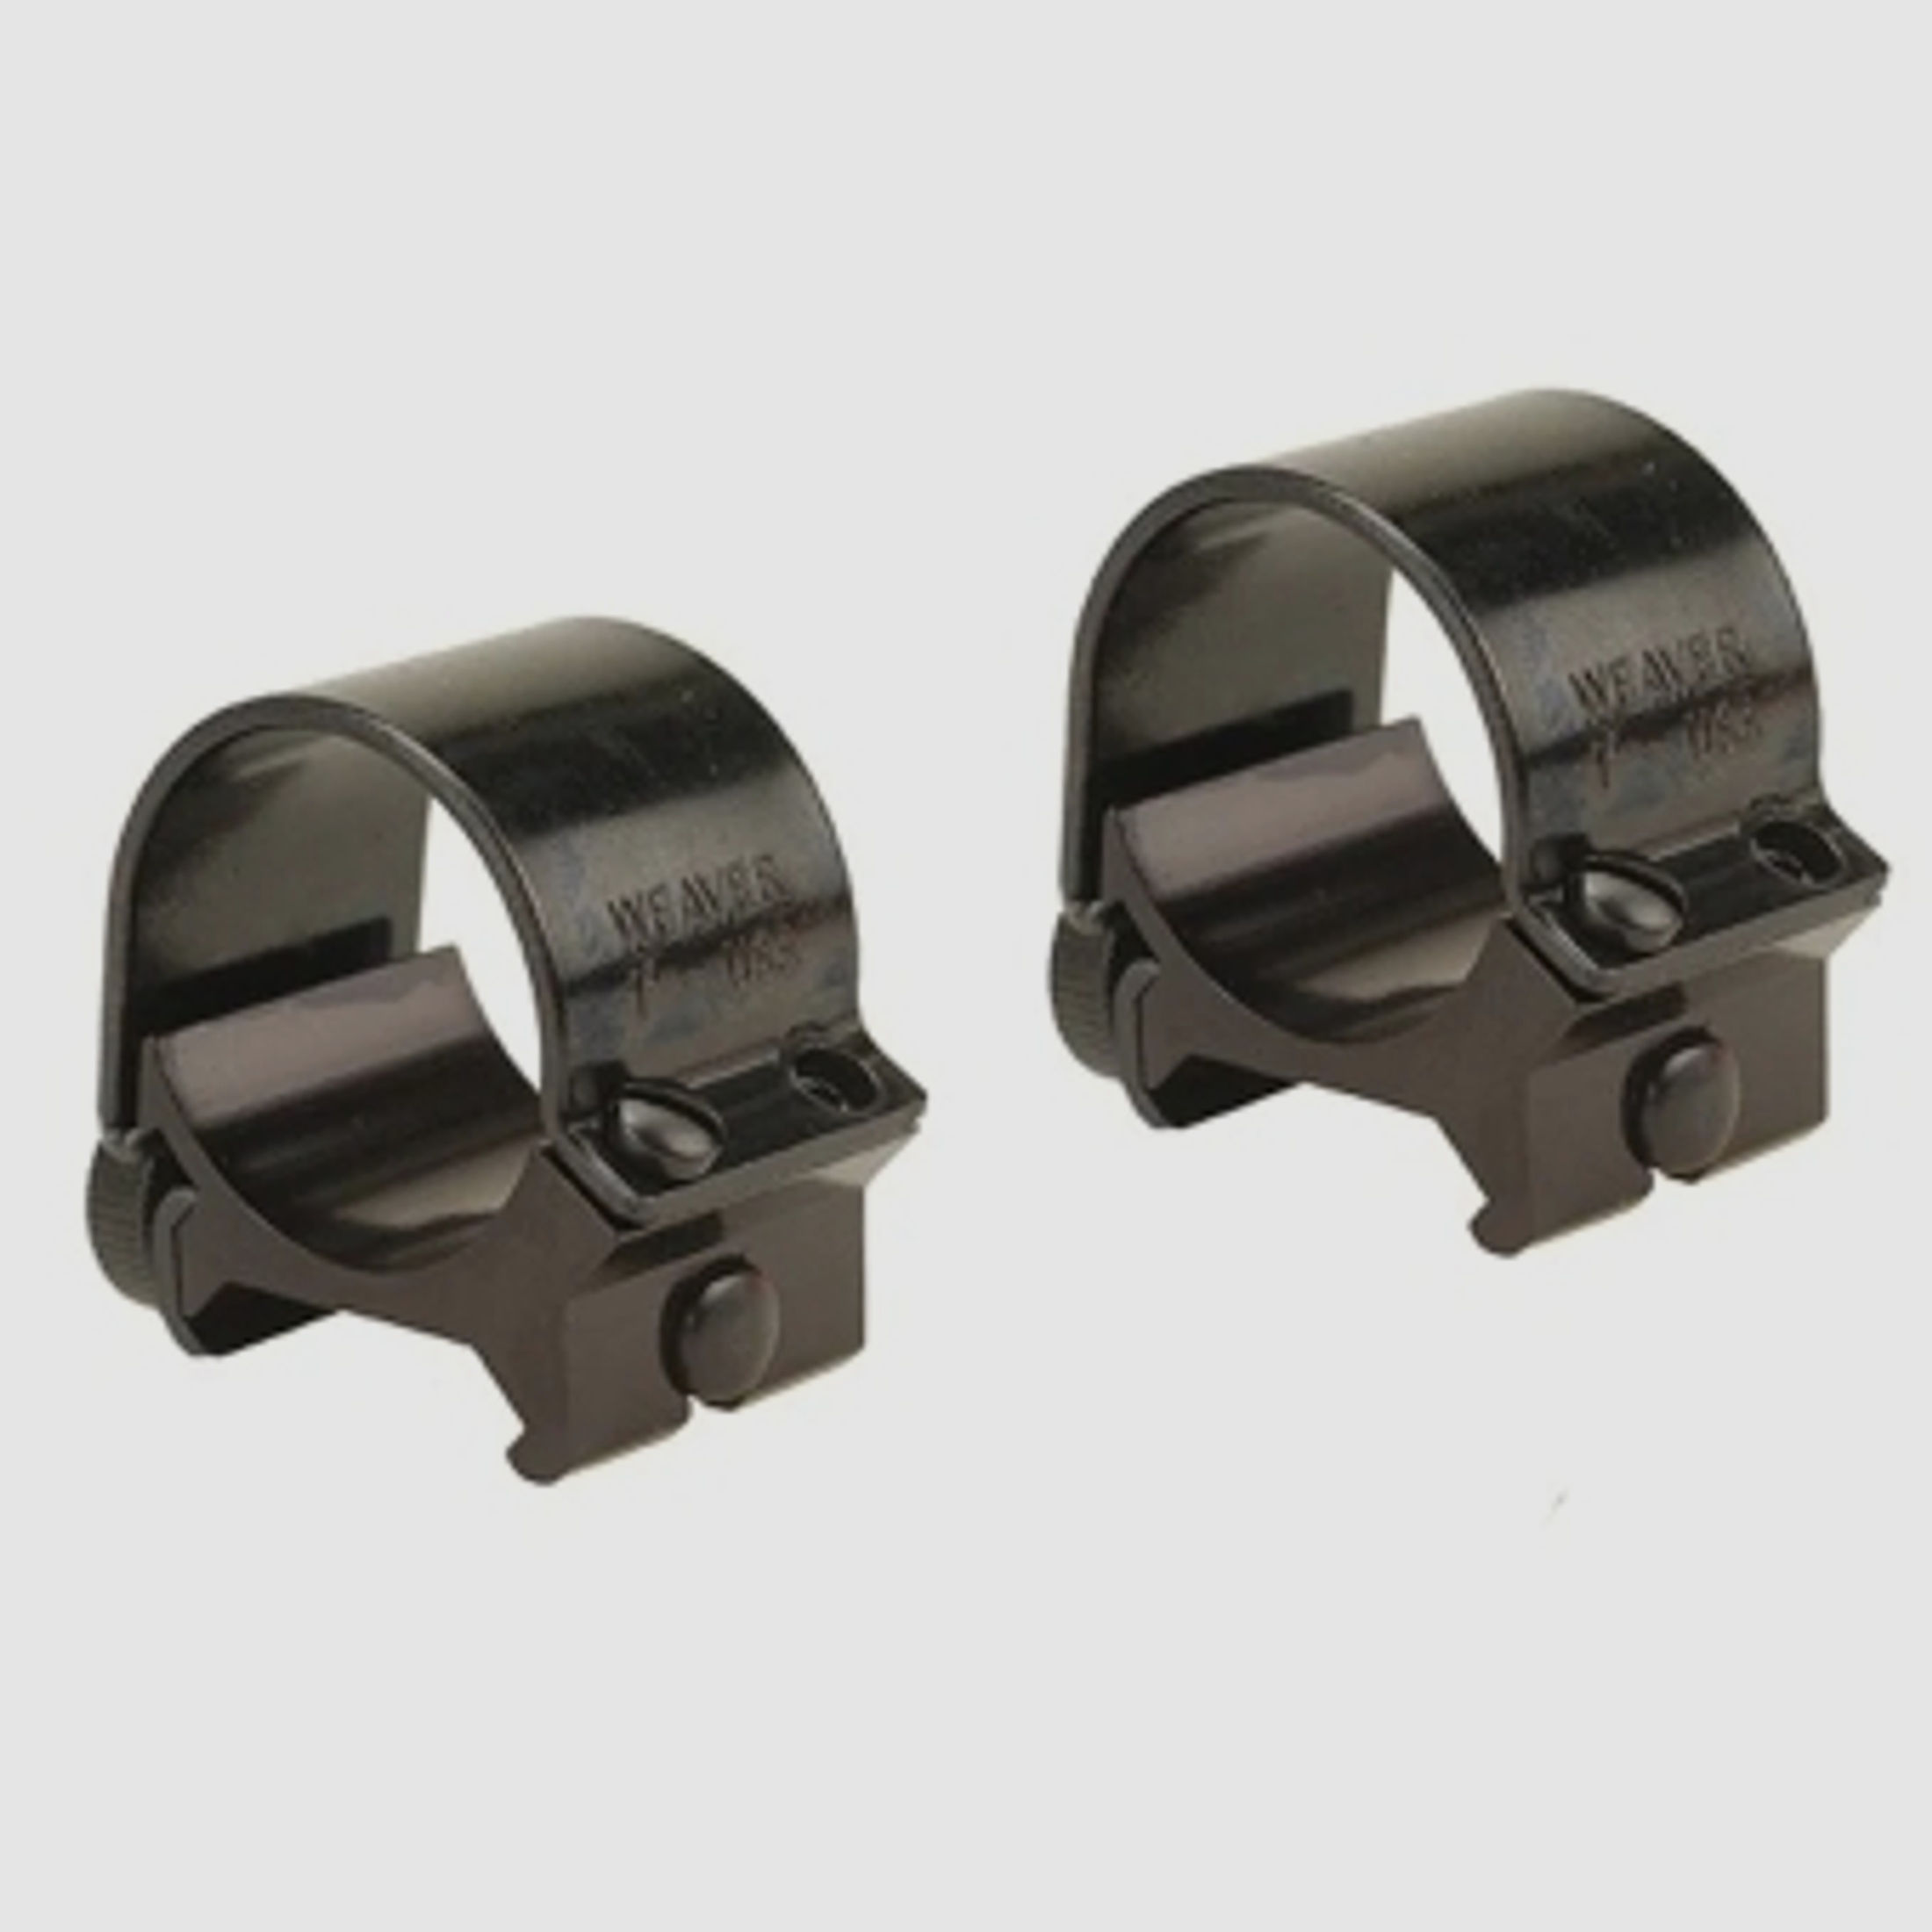 Weaver Top-Mount Weaver-Style Ringe glänzend schwarz 25,4mm low, BH 2,26mm